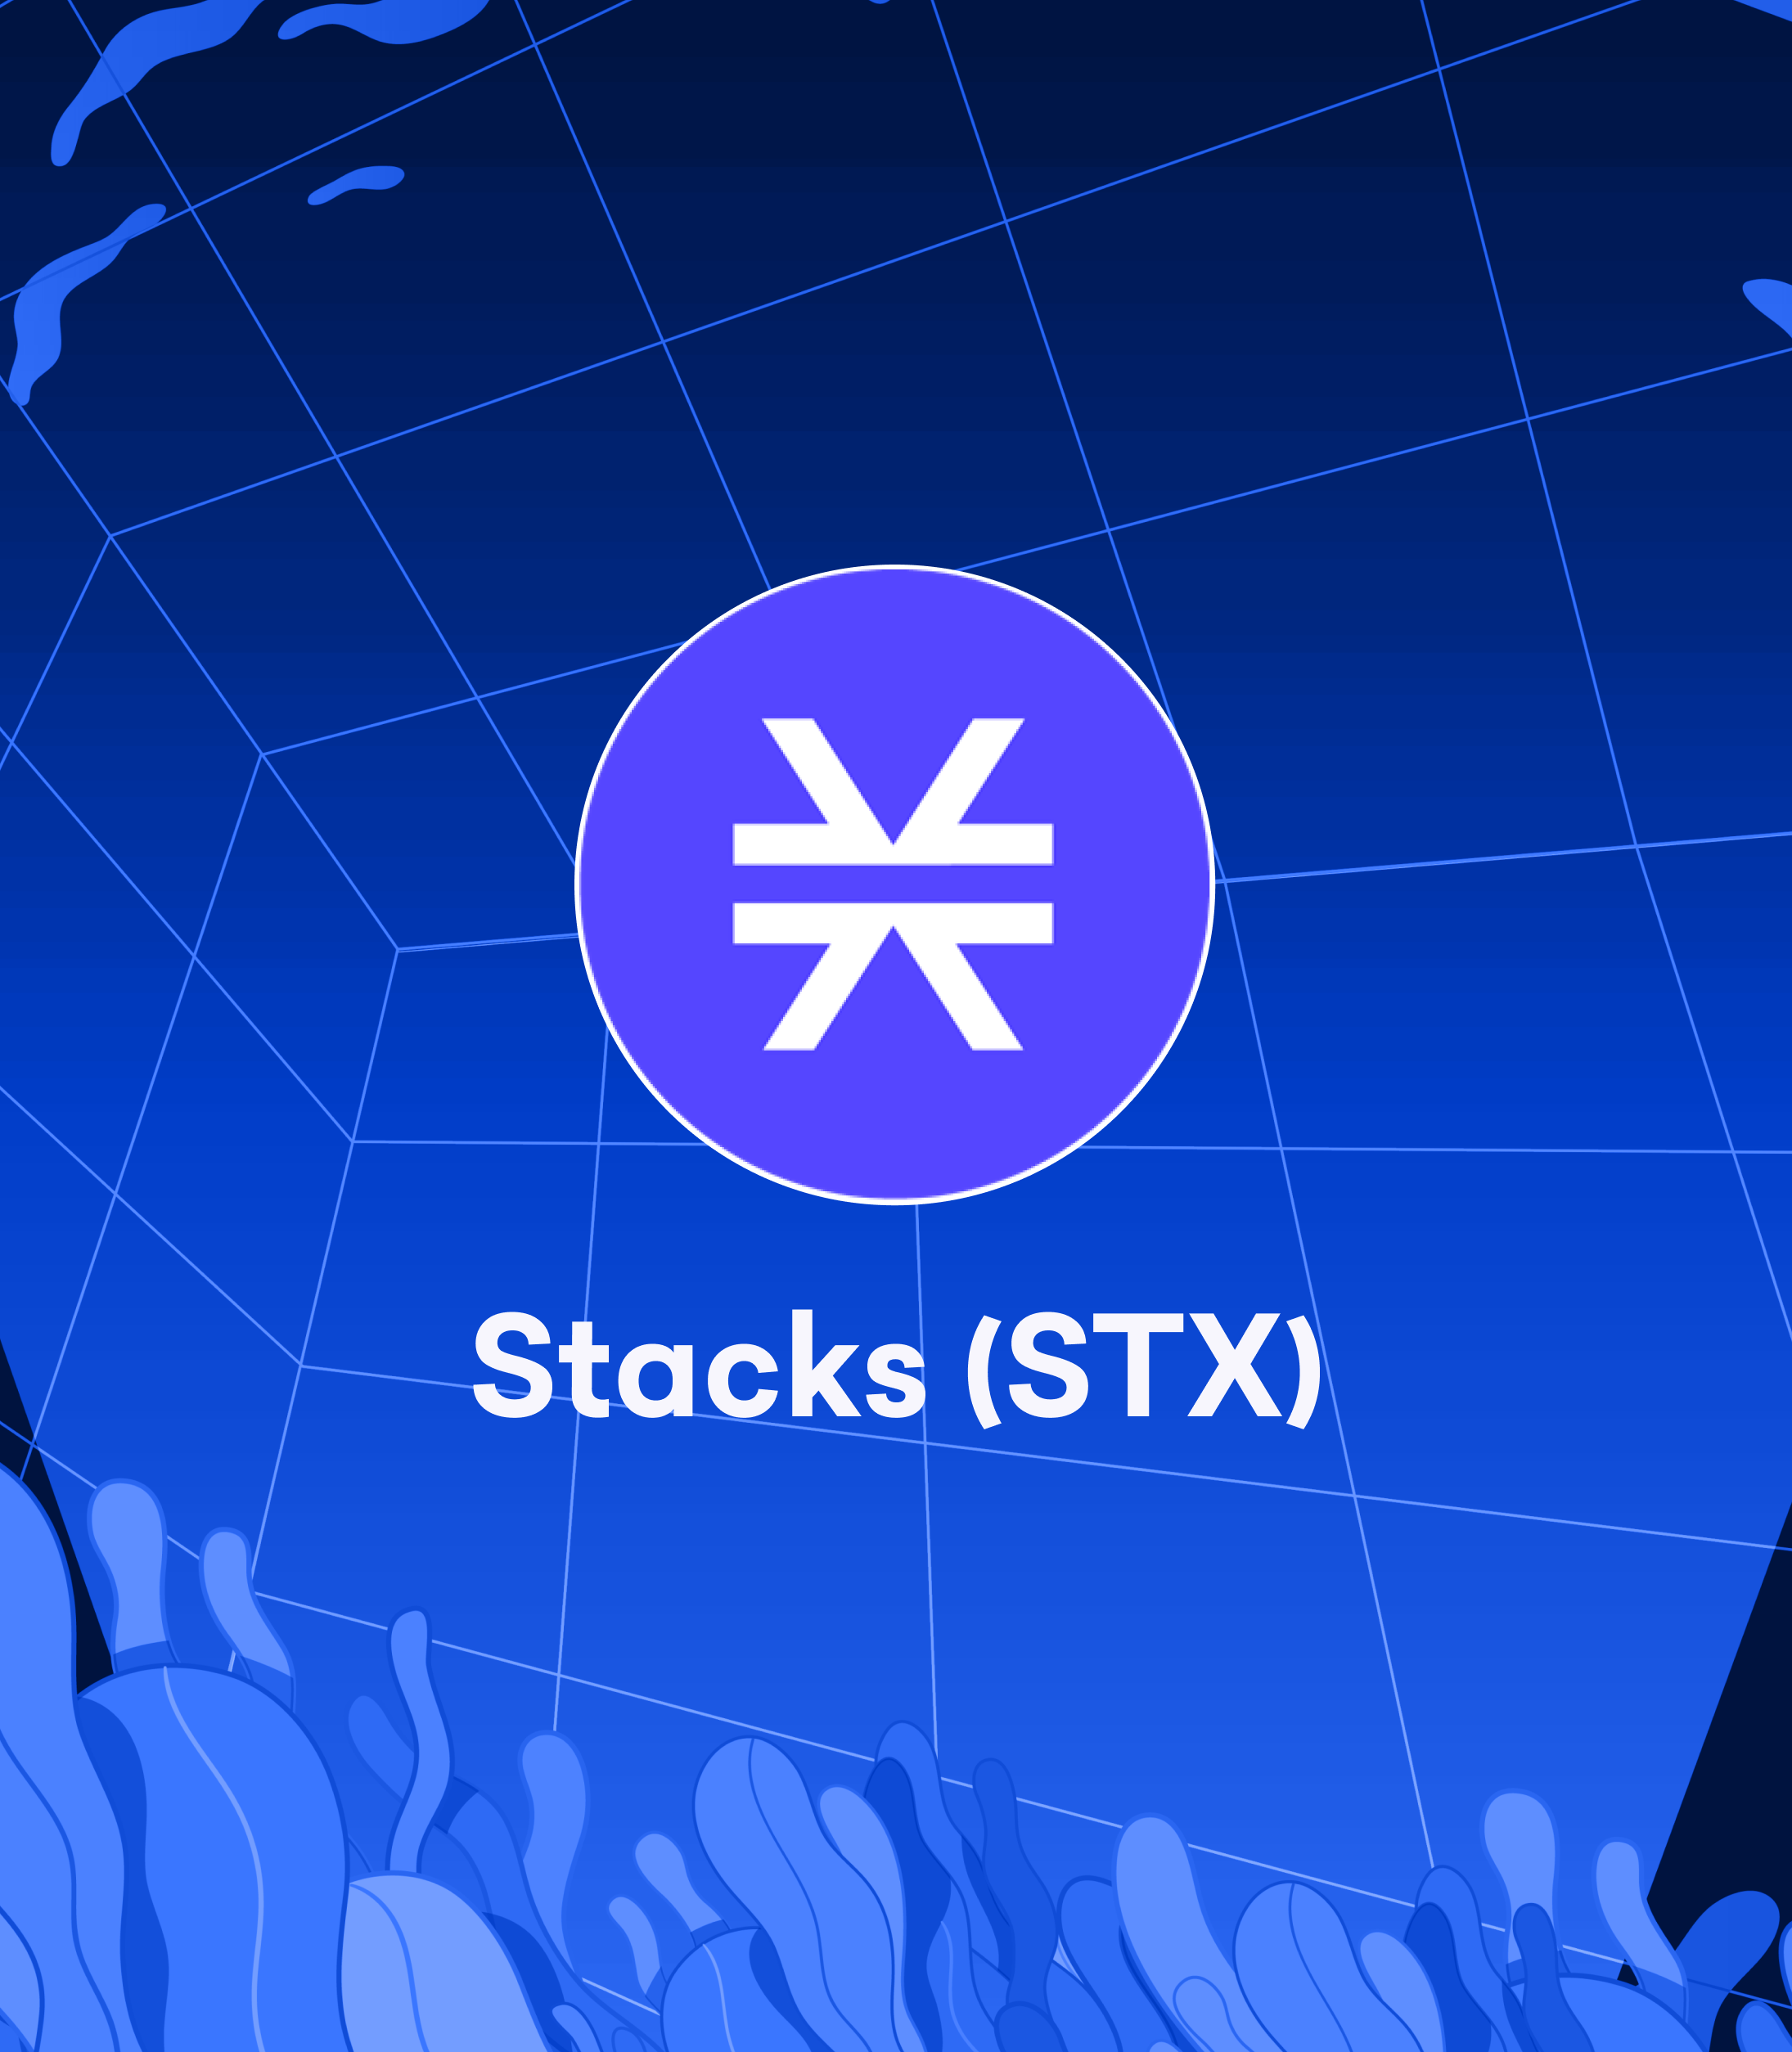 Trading for Stacks (STX) starts October 21 - deposit now!